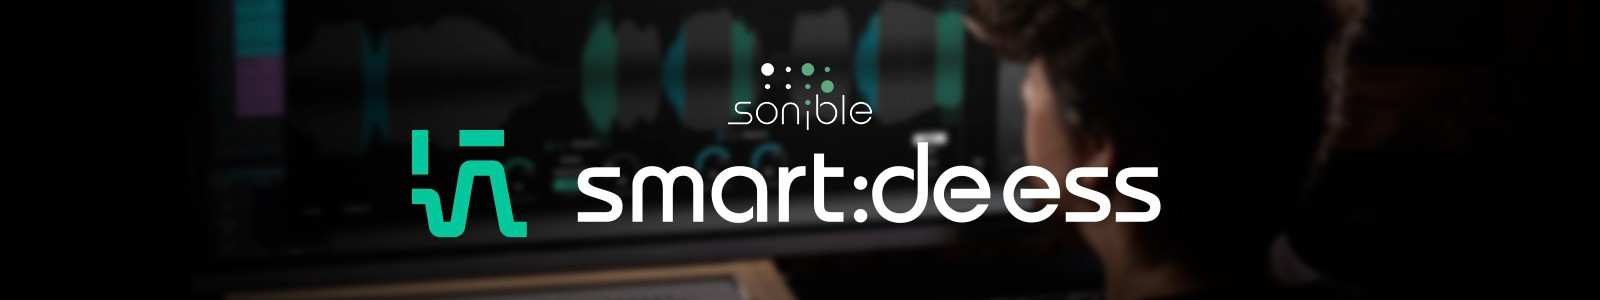 smart:deess by Sonible